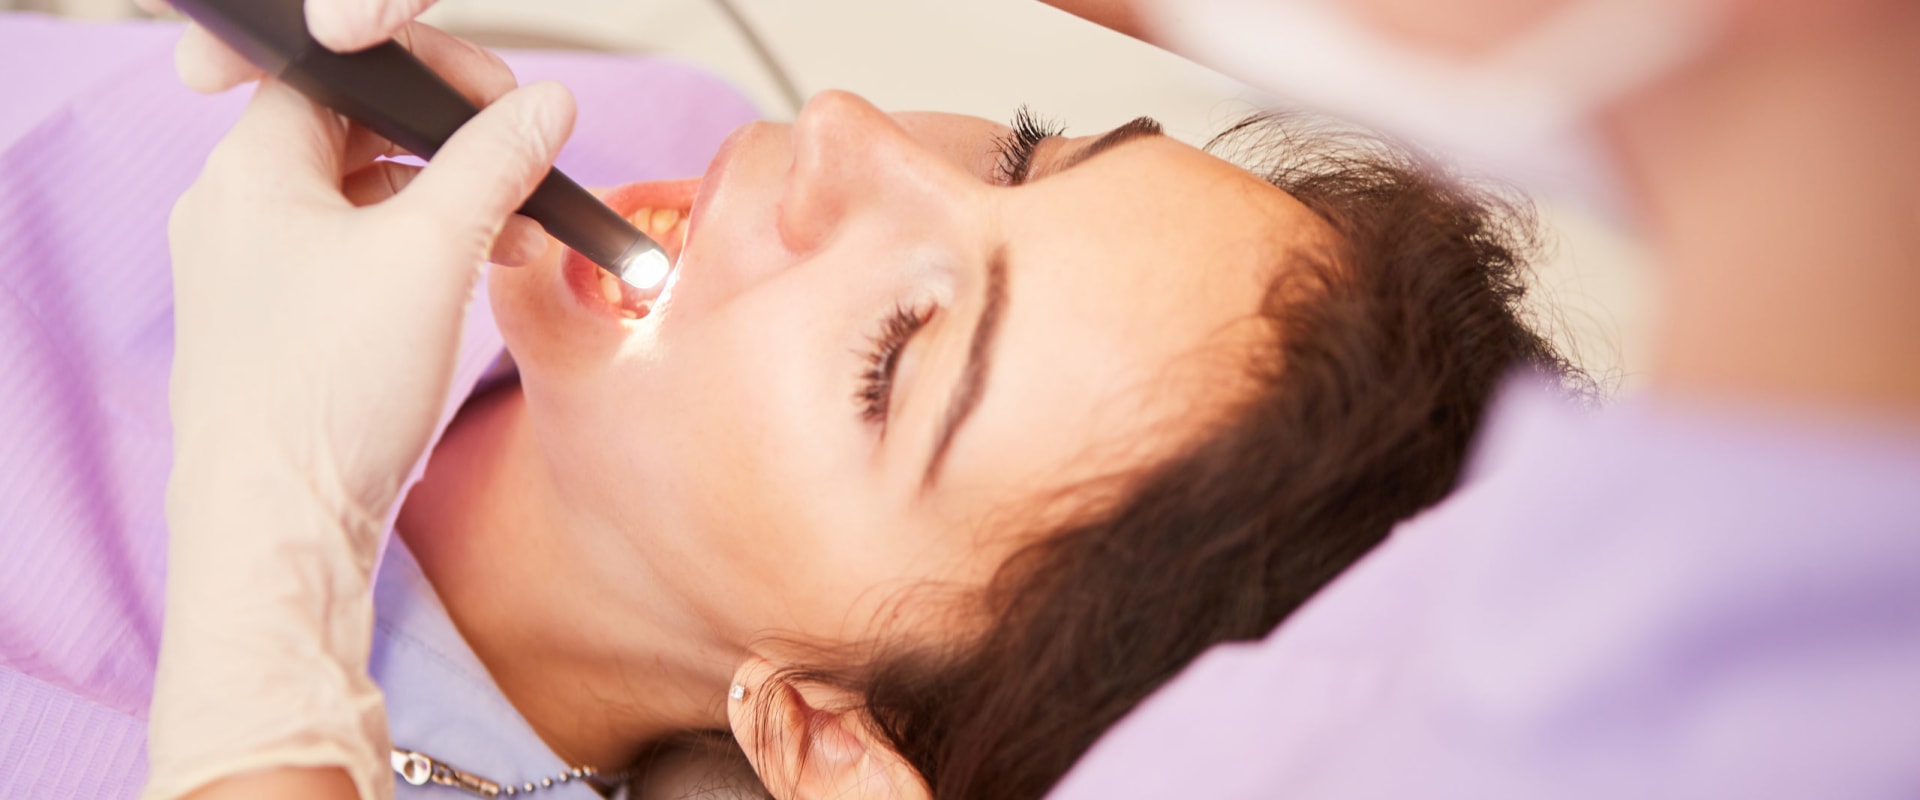 Do Emergency Dentists Provide Preventive Care Services?